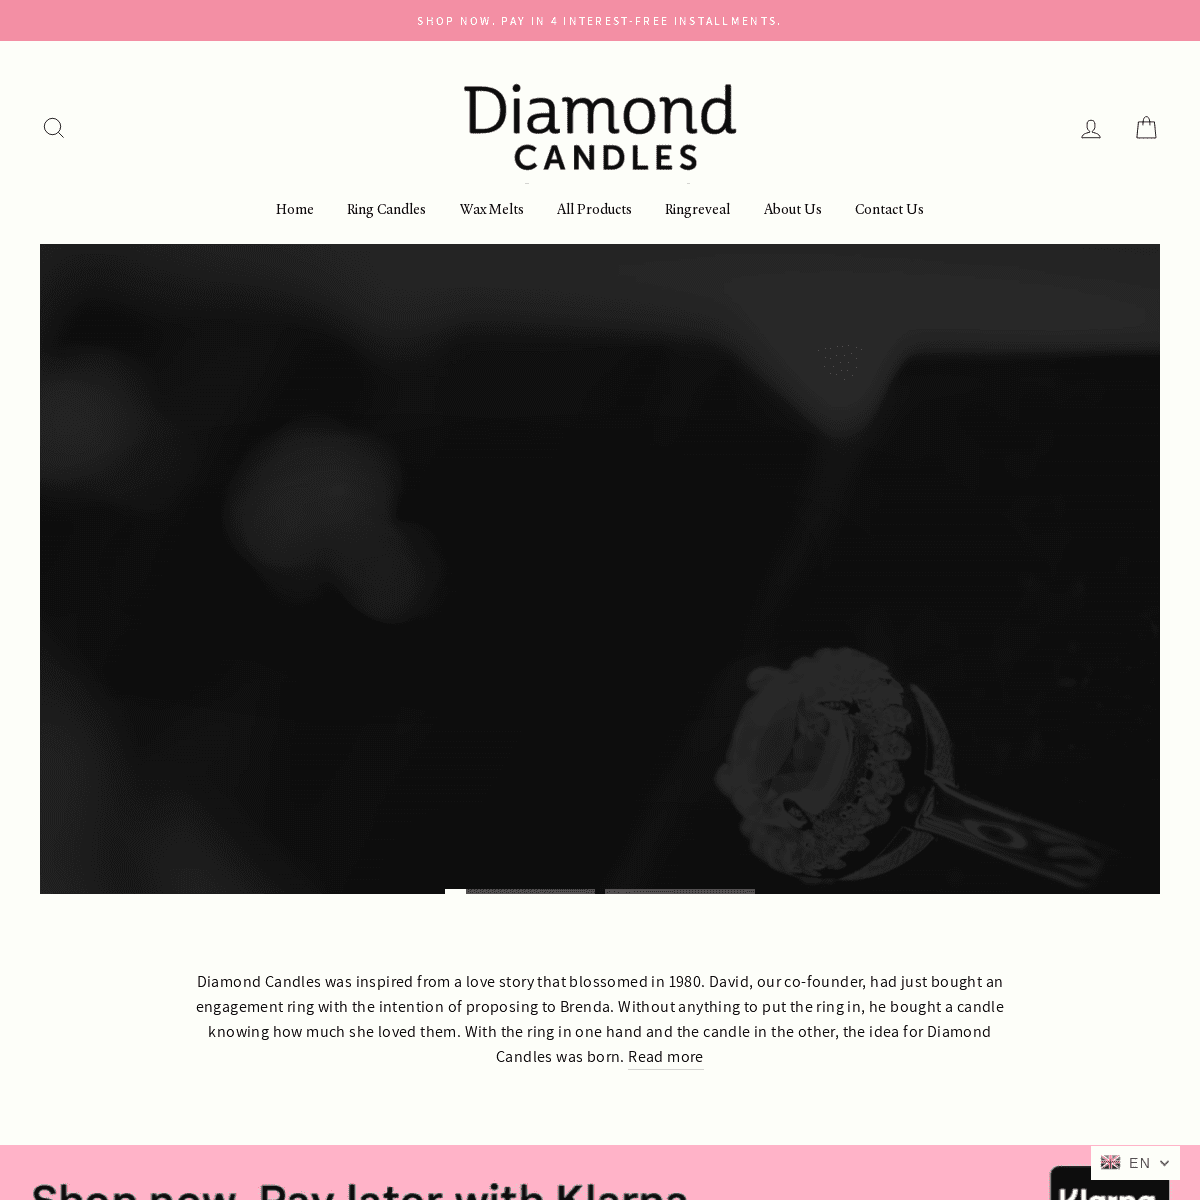 A complete backup of https://diamondcandles.com